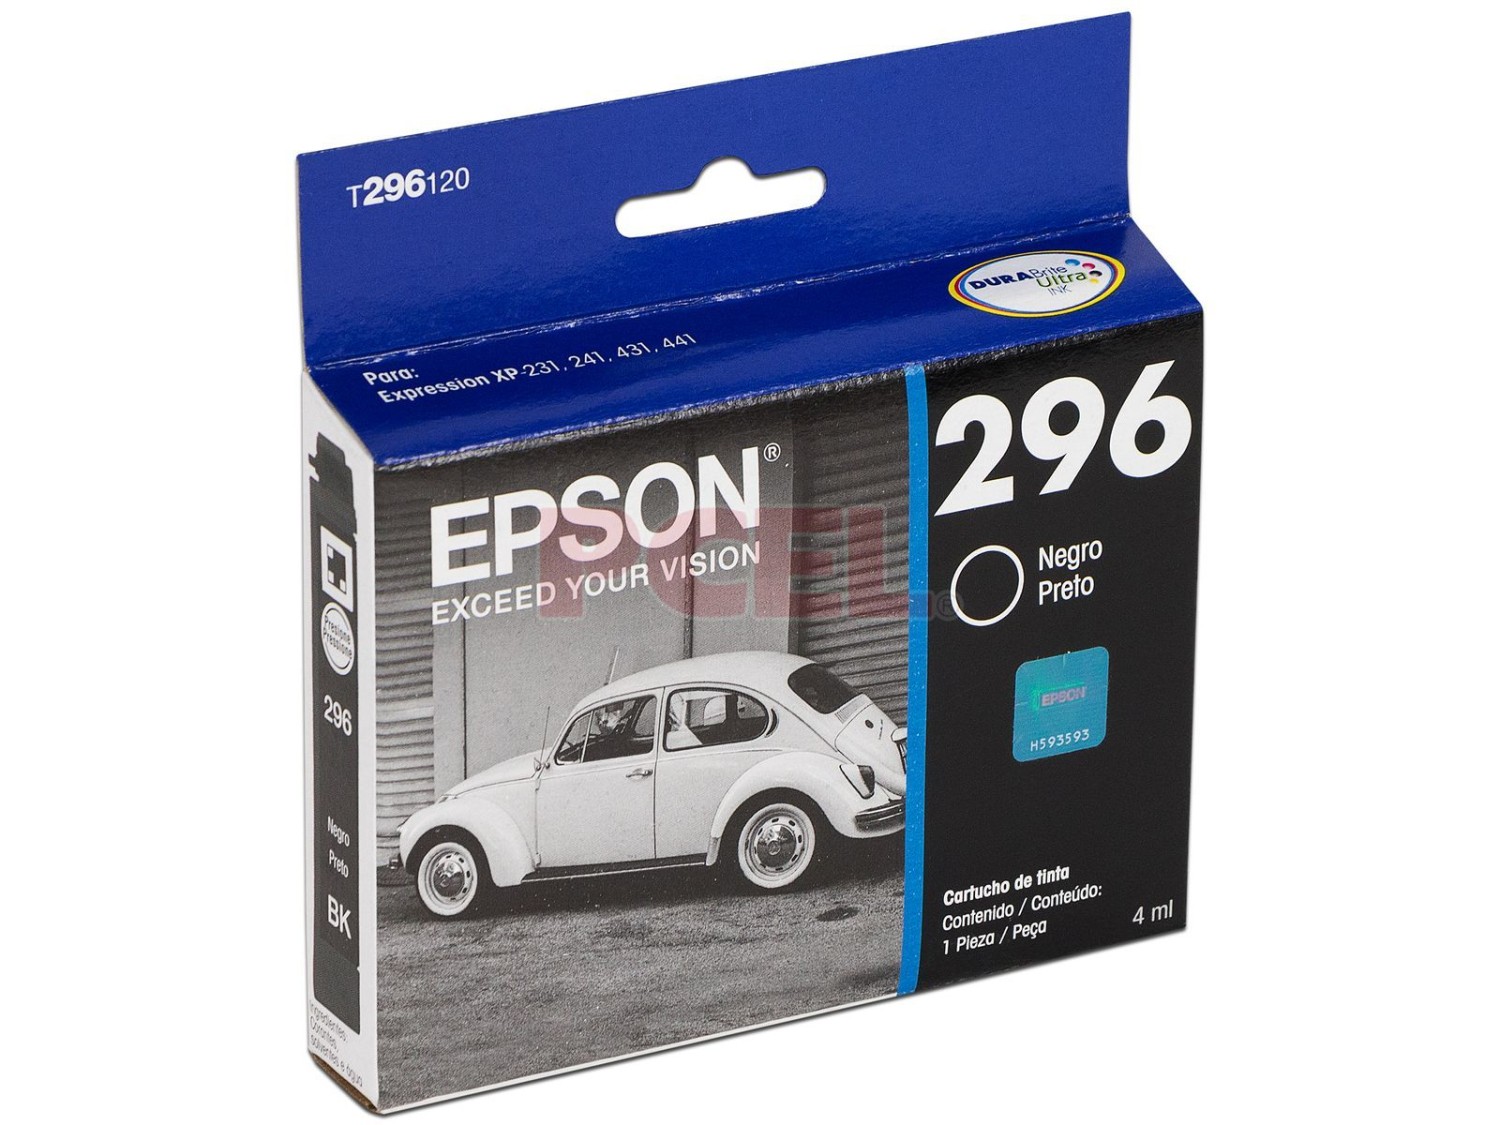 Epson 296 - Black - original